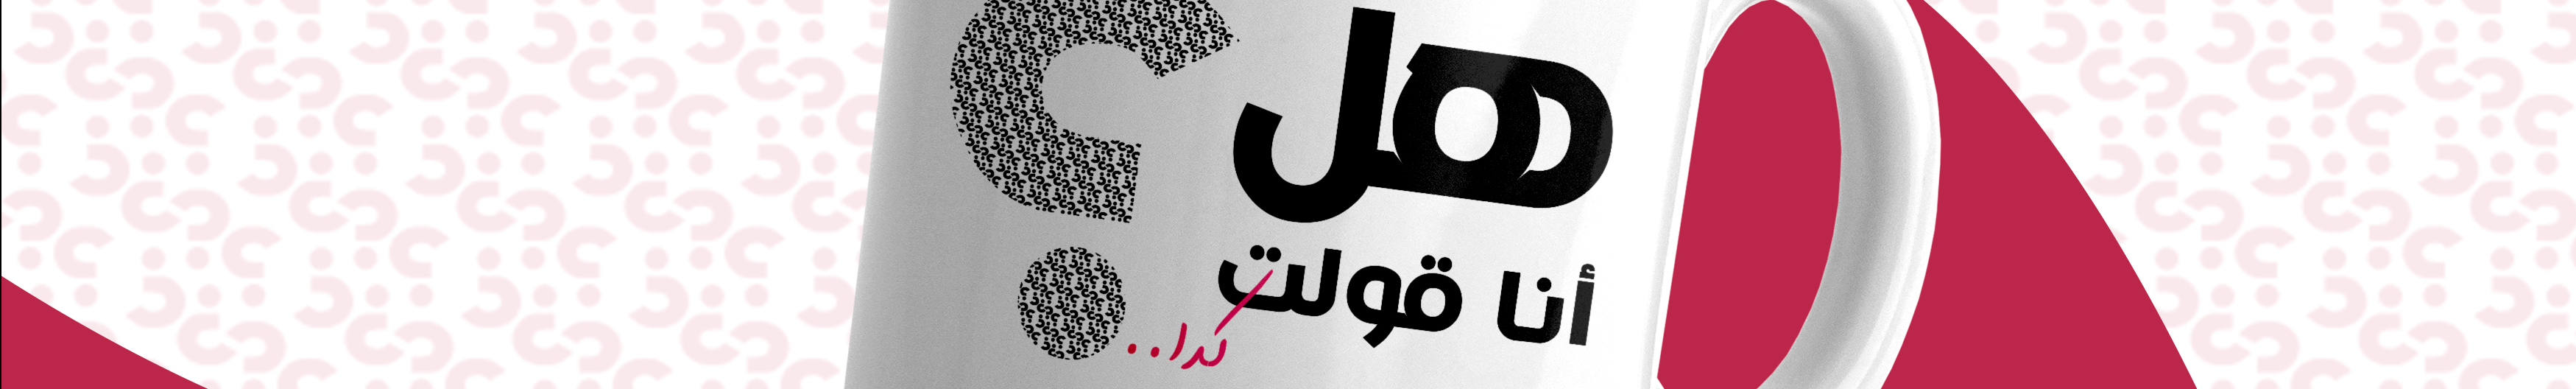 ghada elrefaee's profile banner